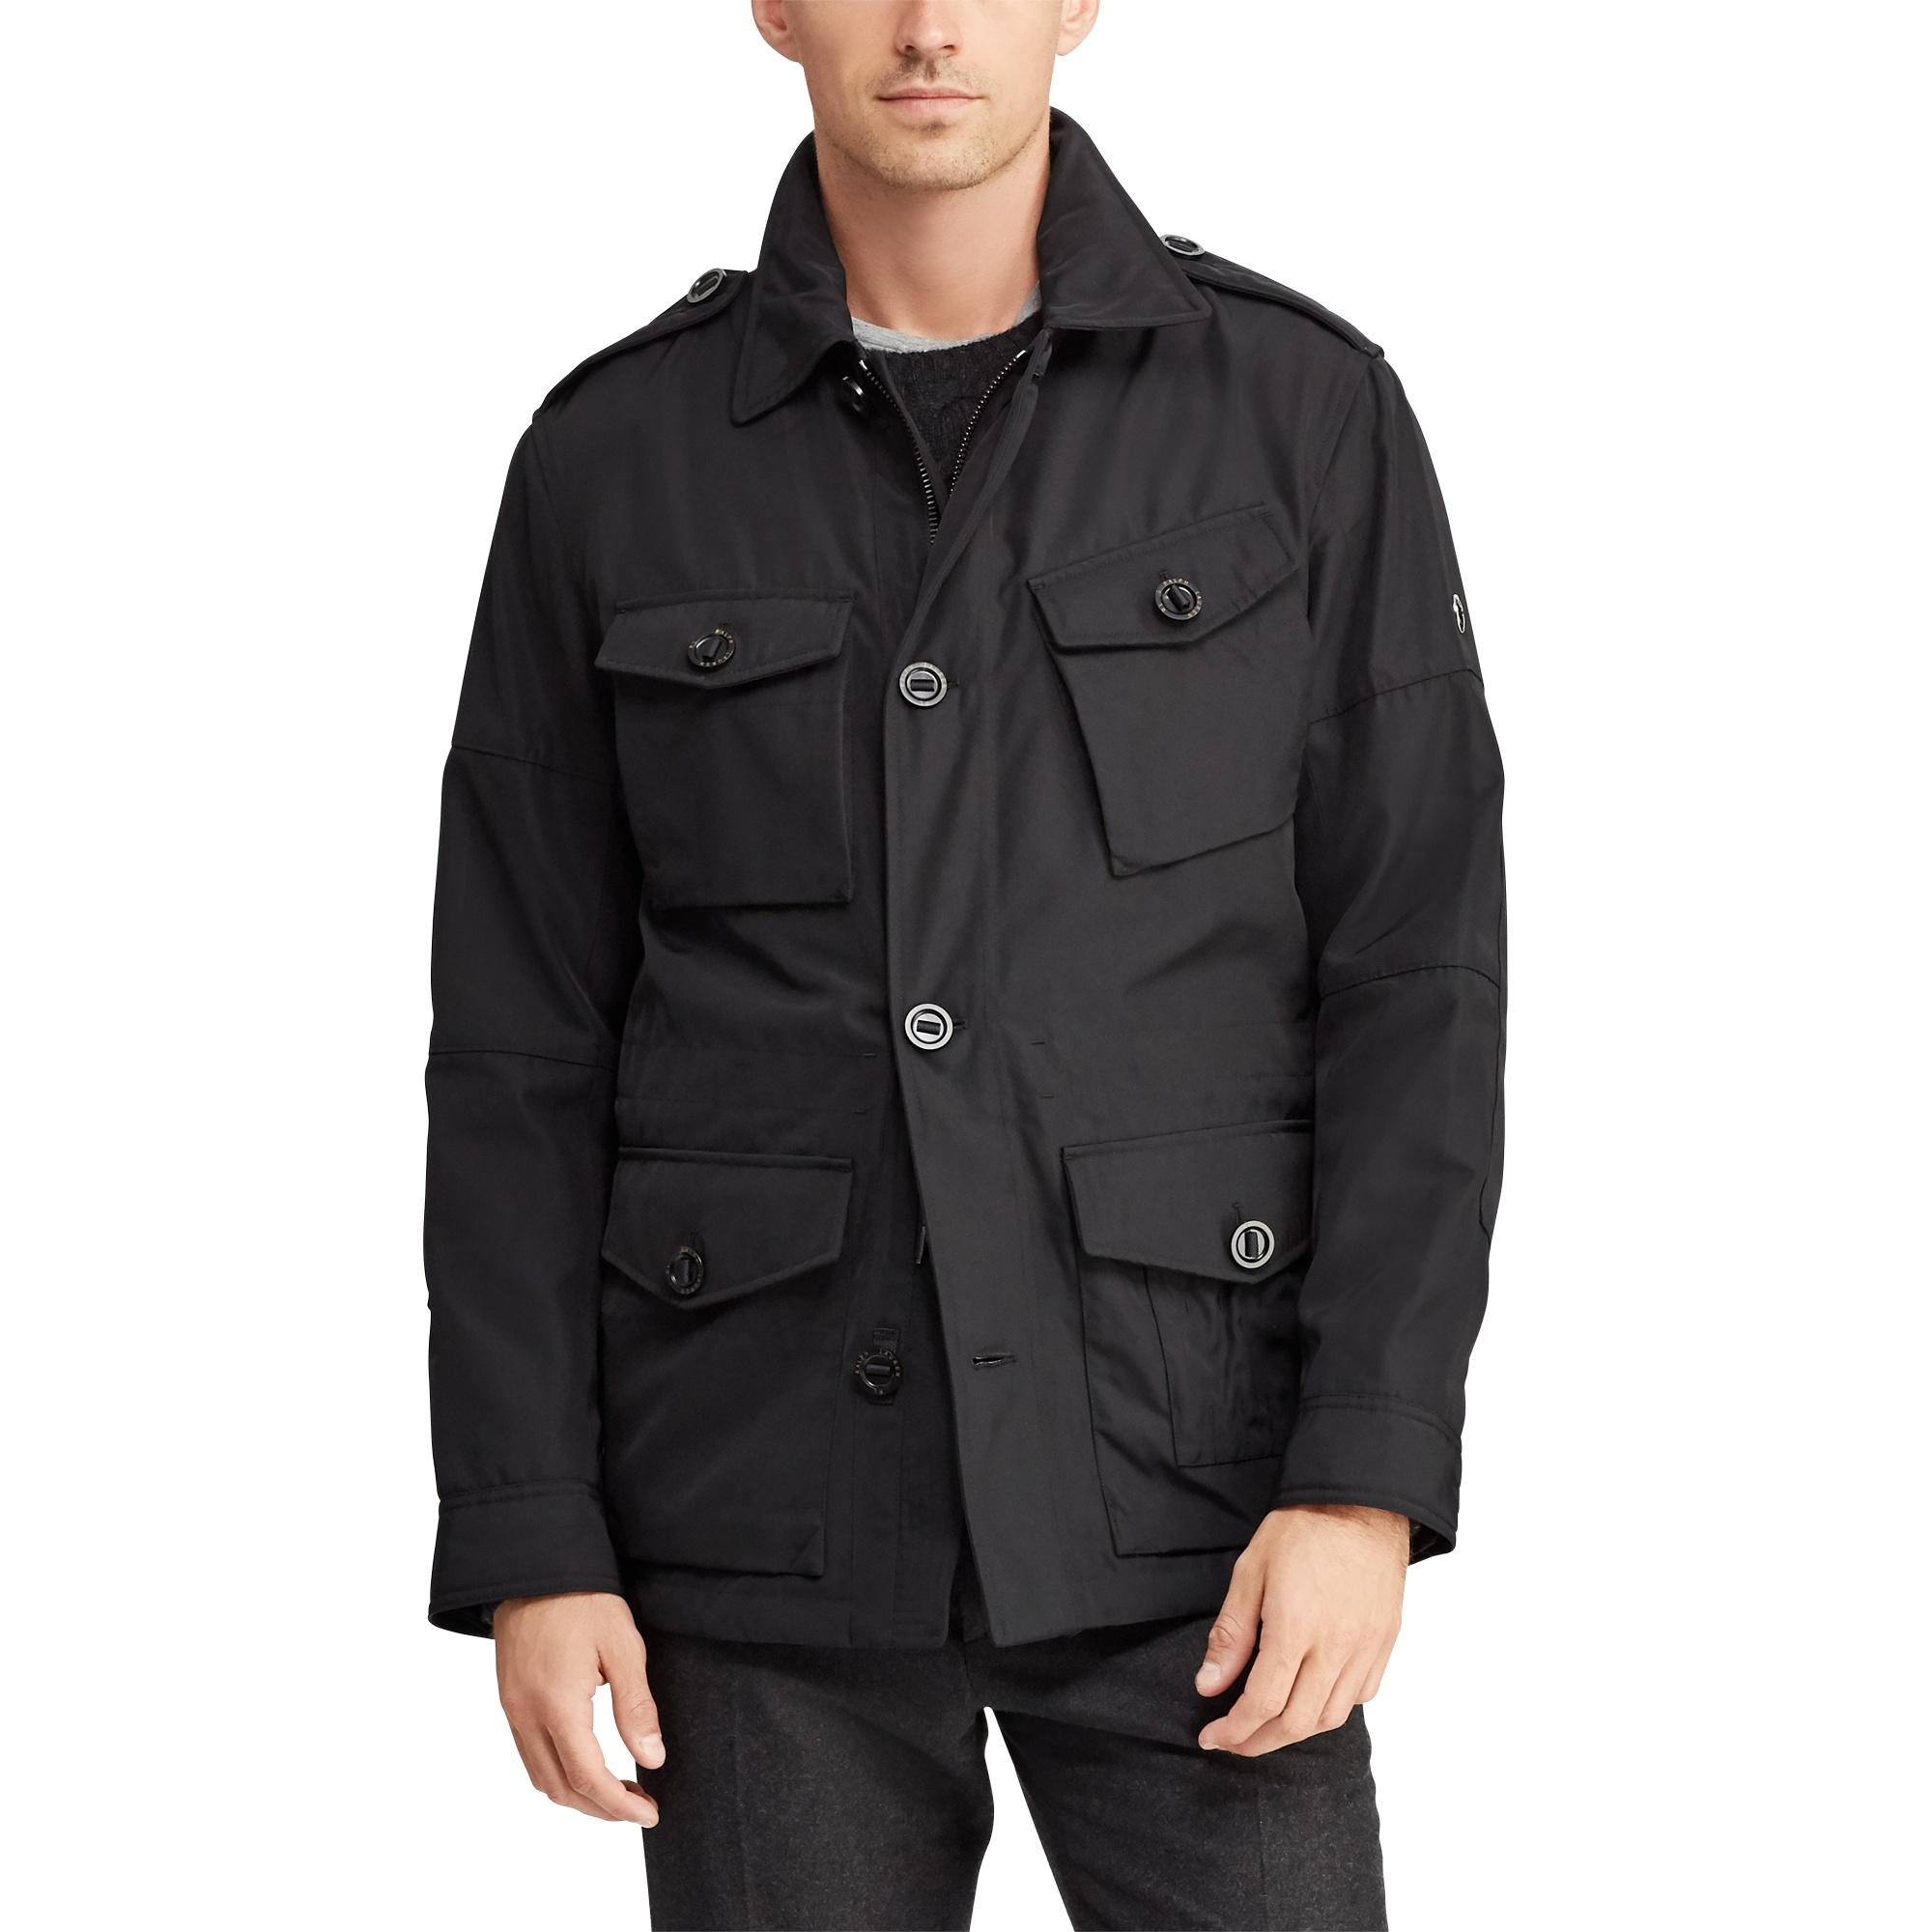 Ralph Lauren Synthetic Rlx Field Jacket in Black for Men - Lyst